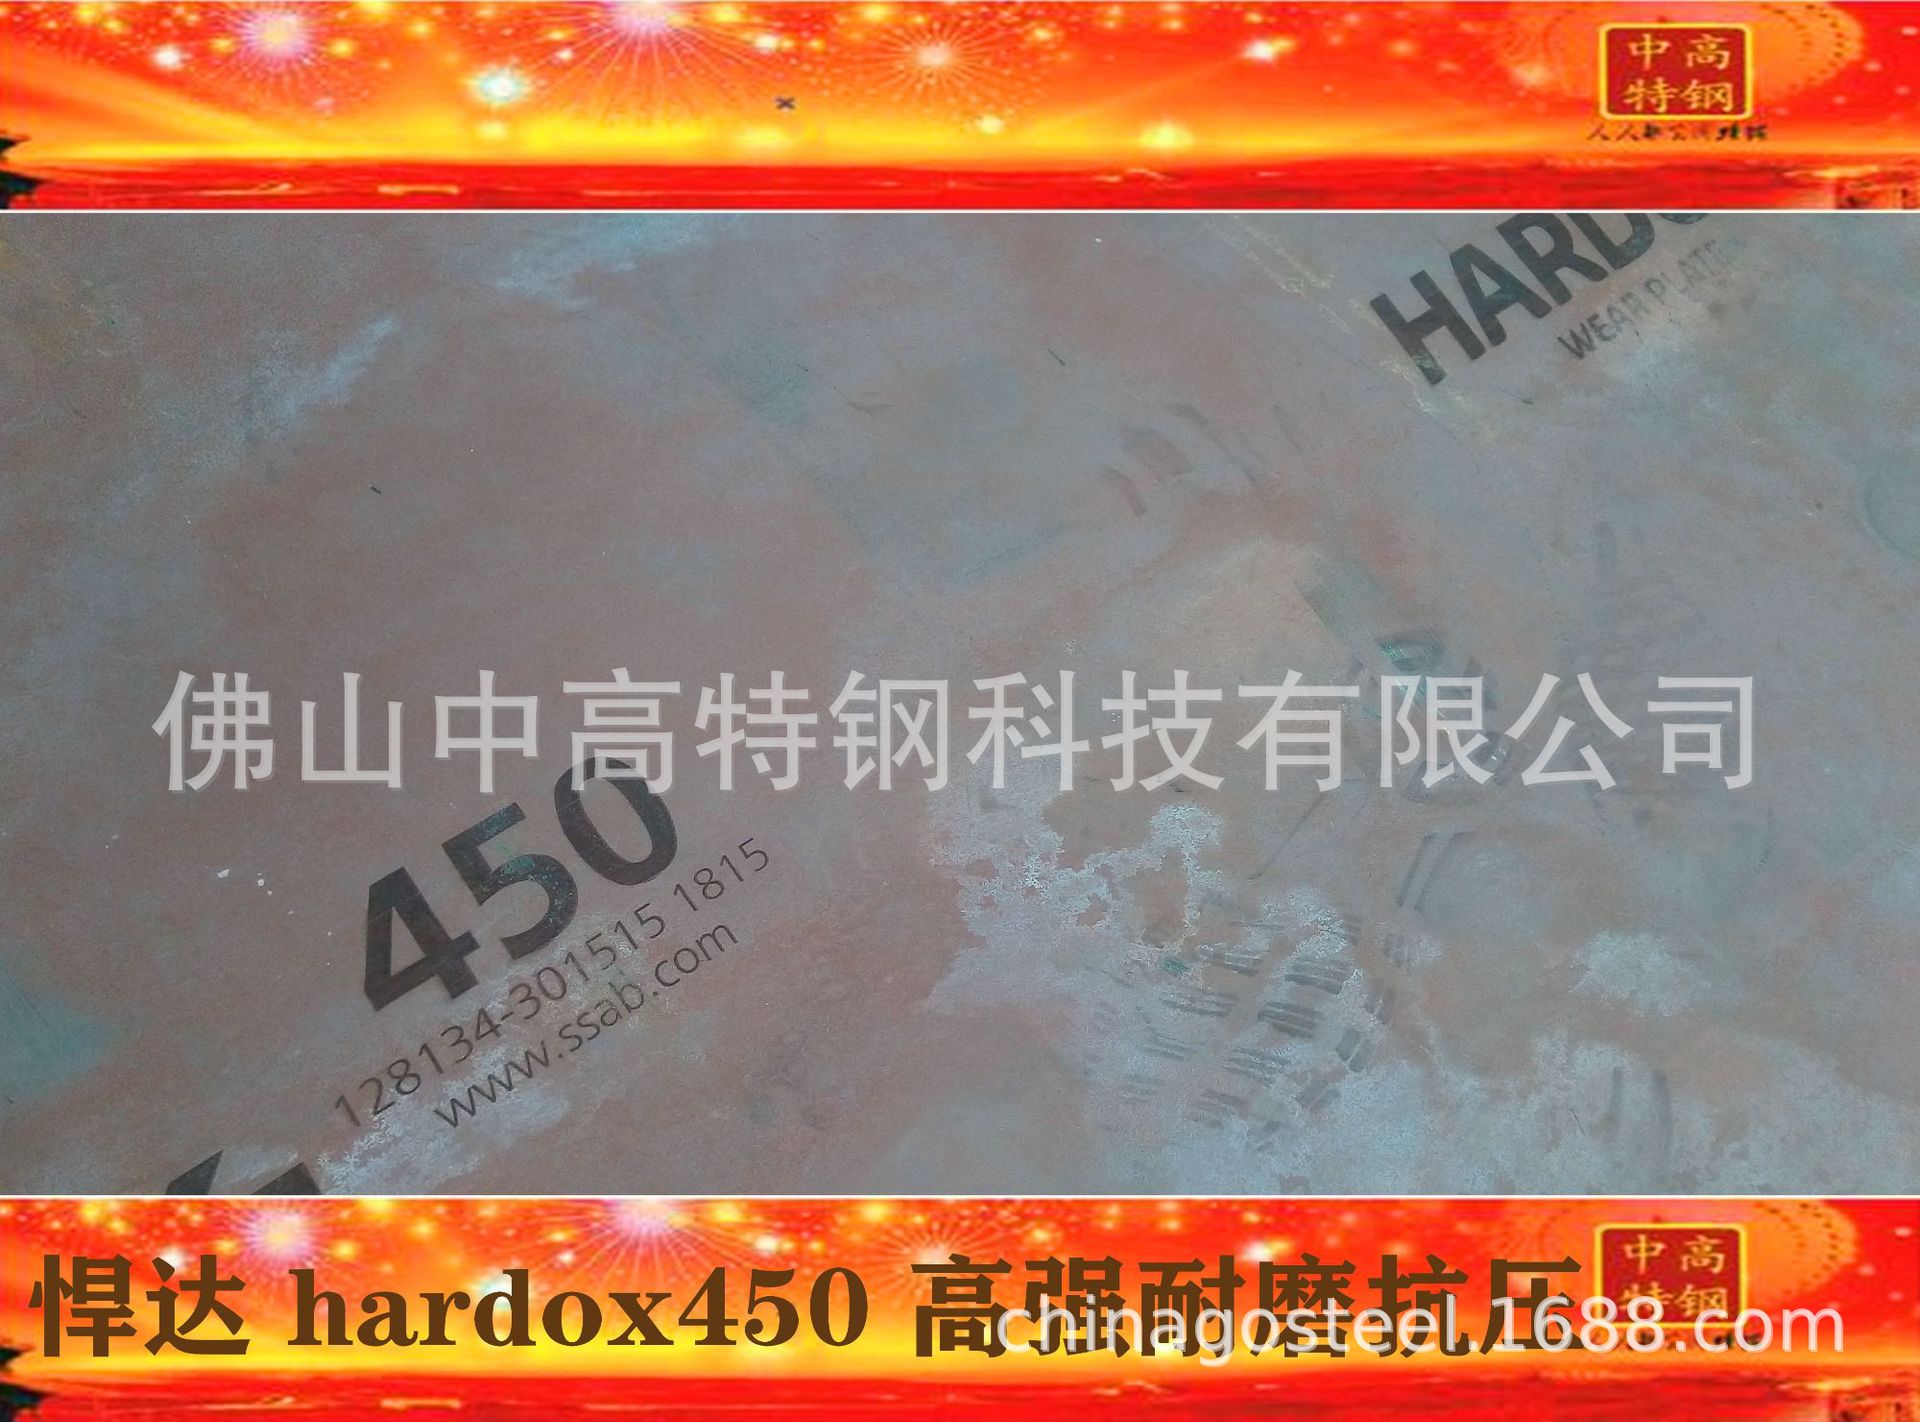 hardox450 标签